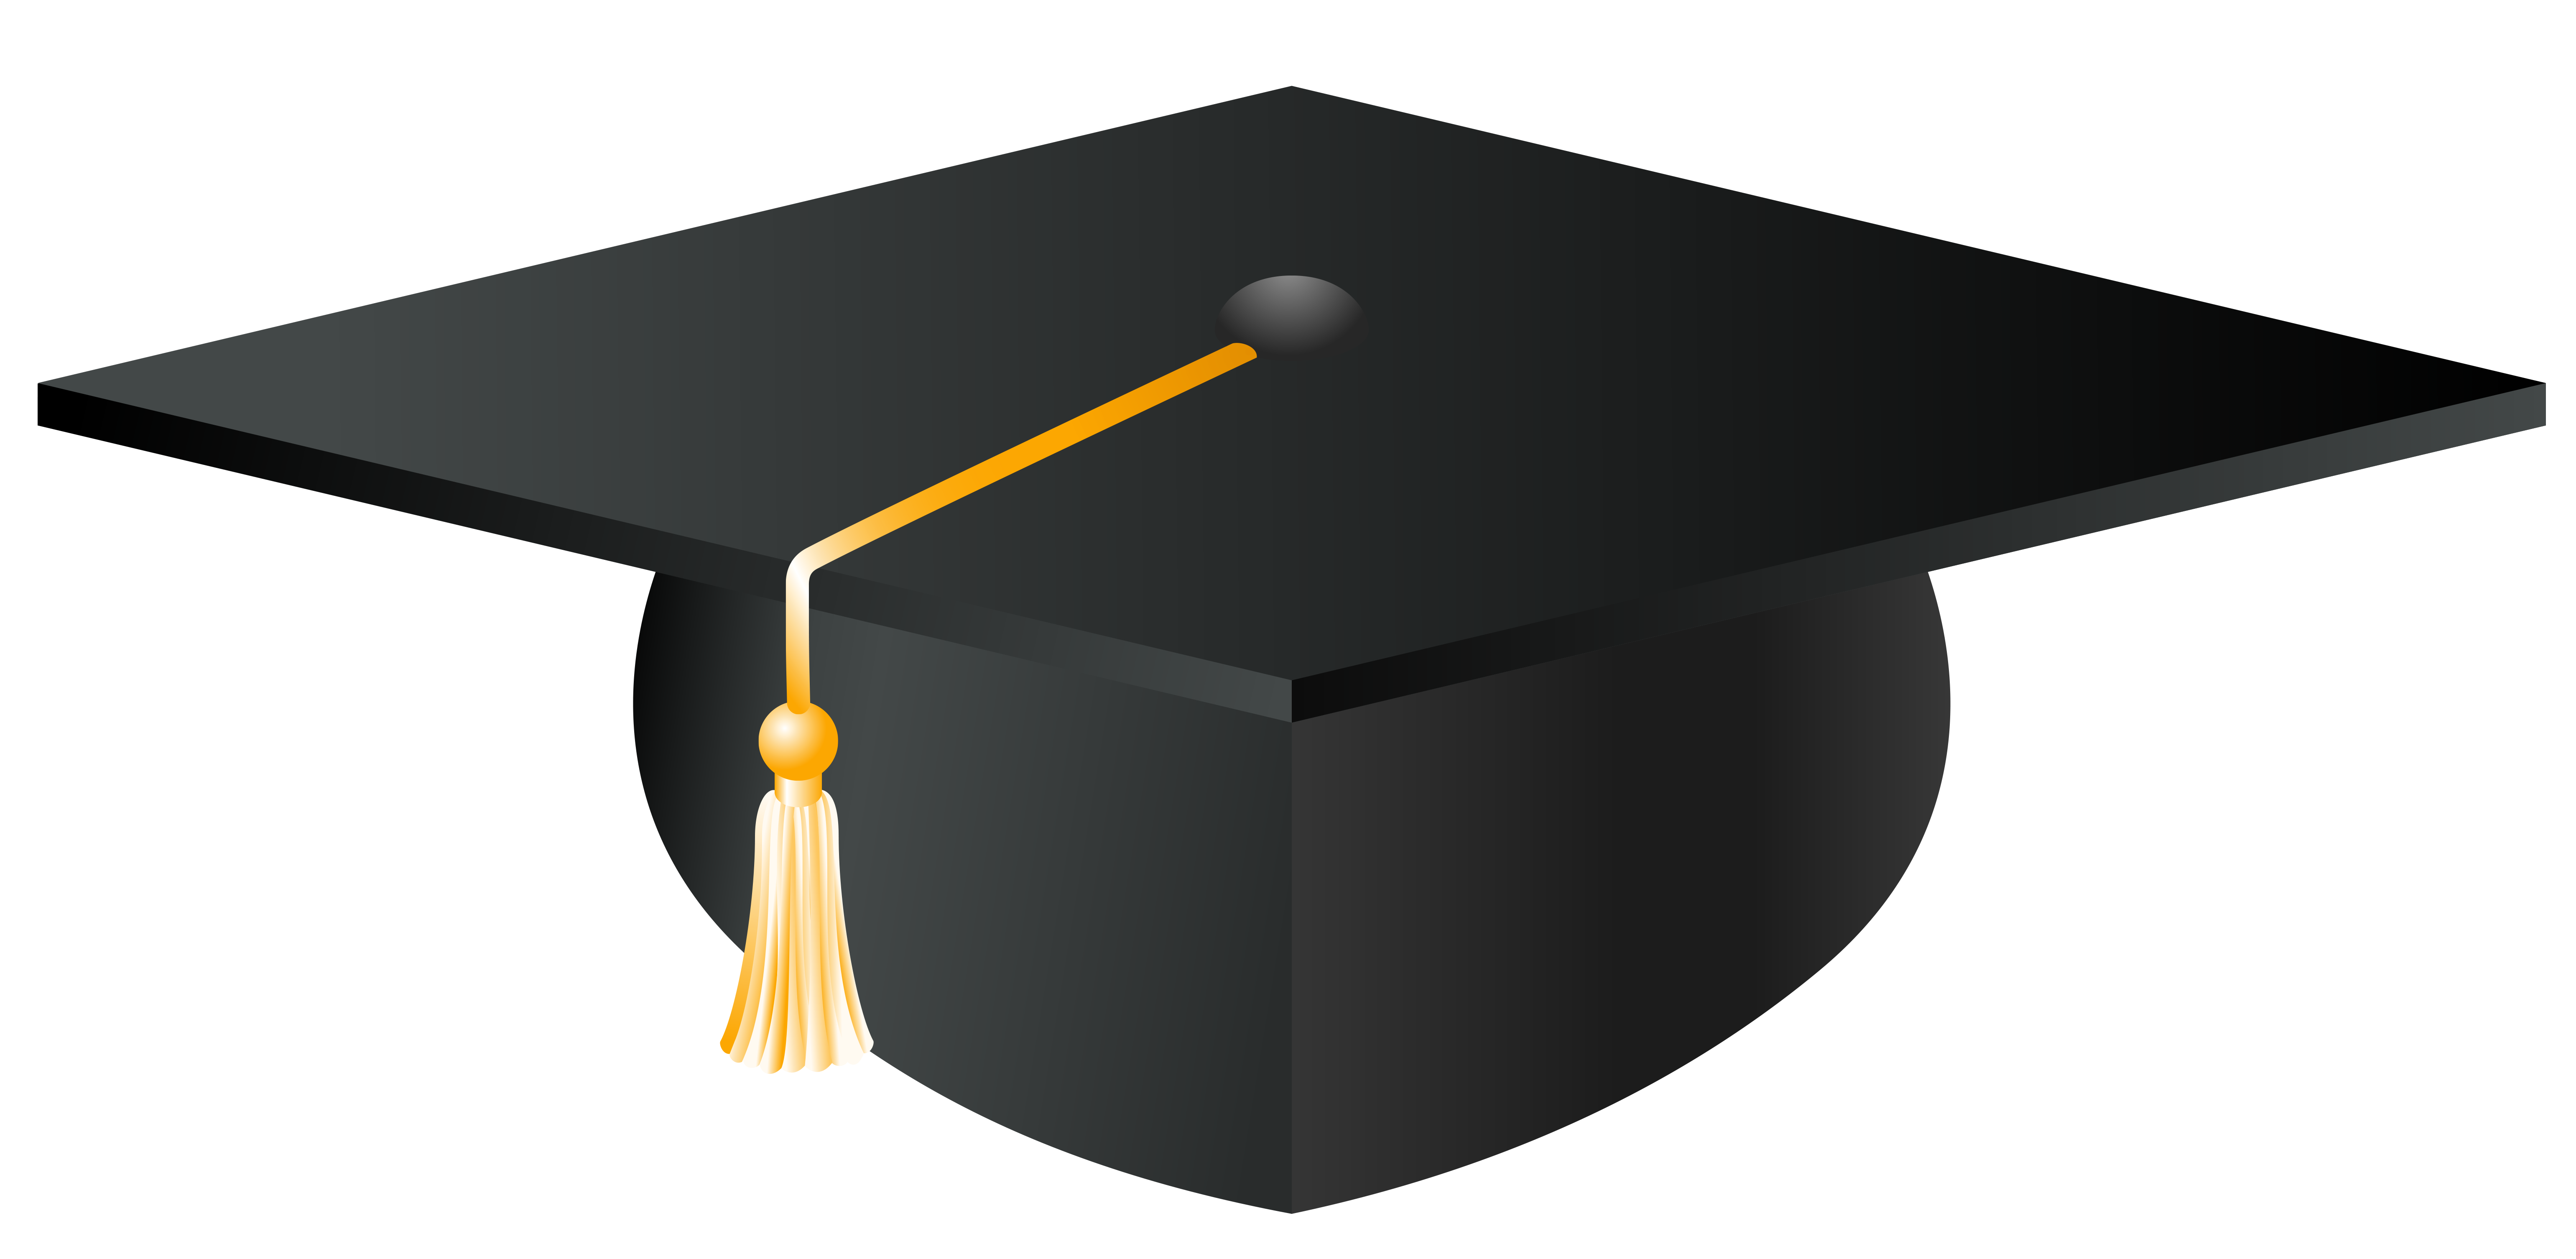 Free Graduation Hat Transparent, Download Free Graduation Hat